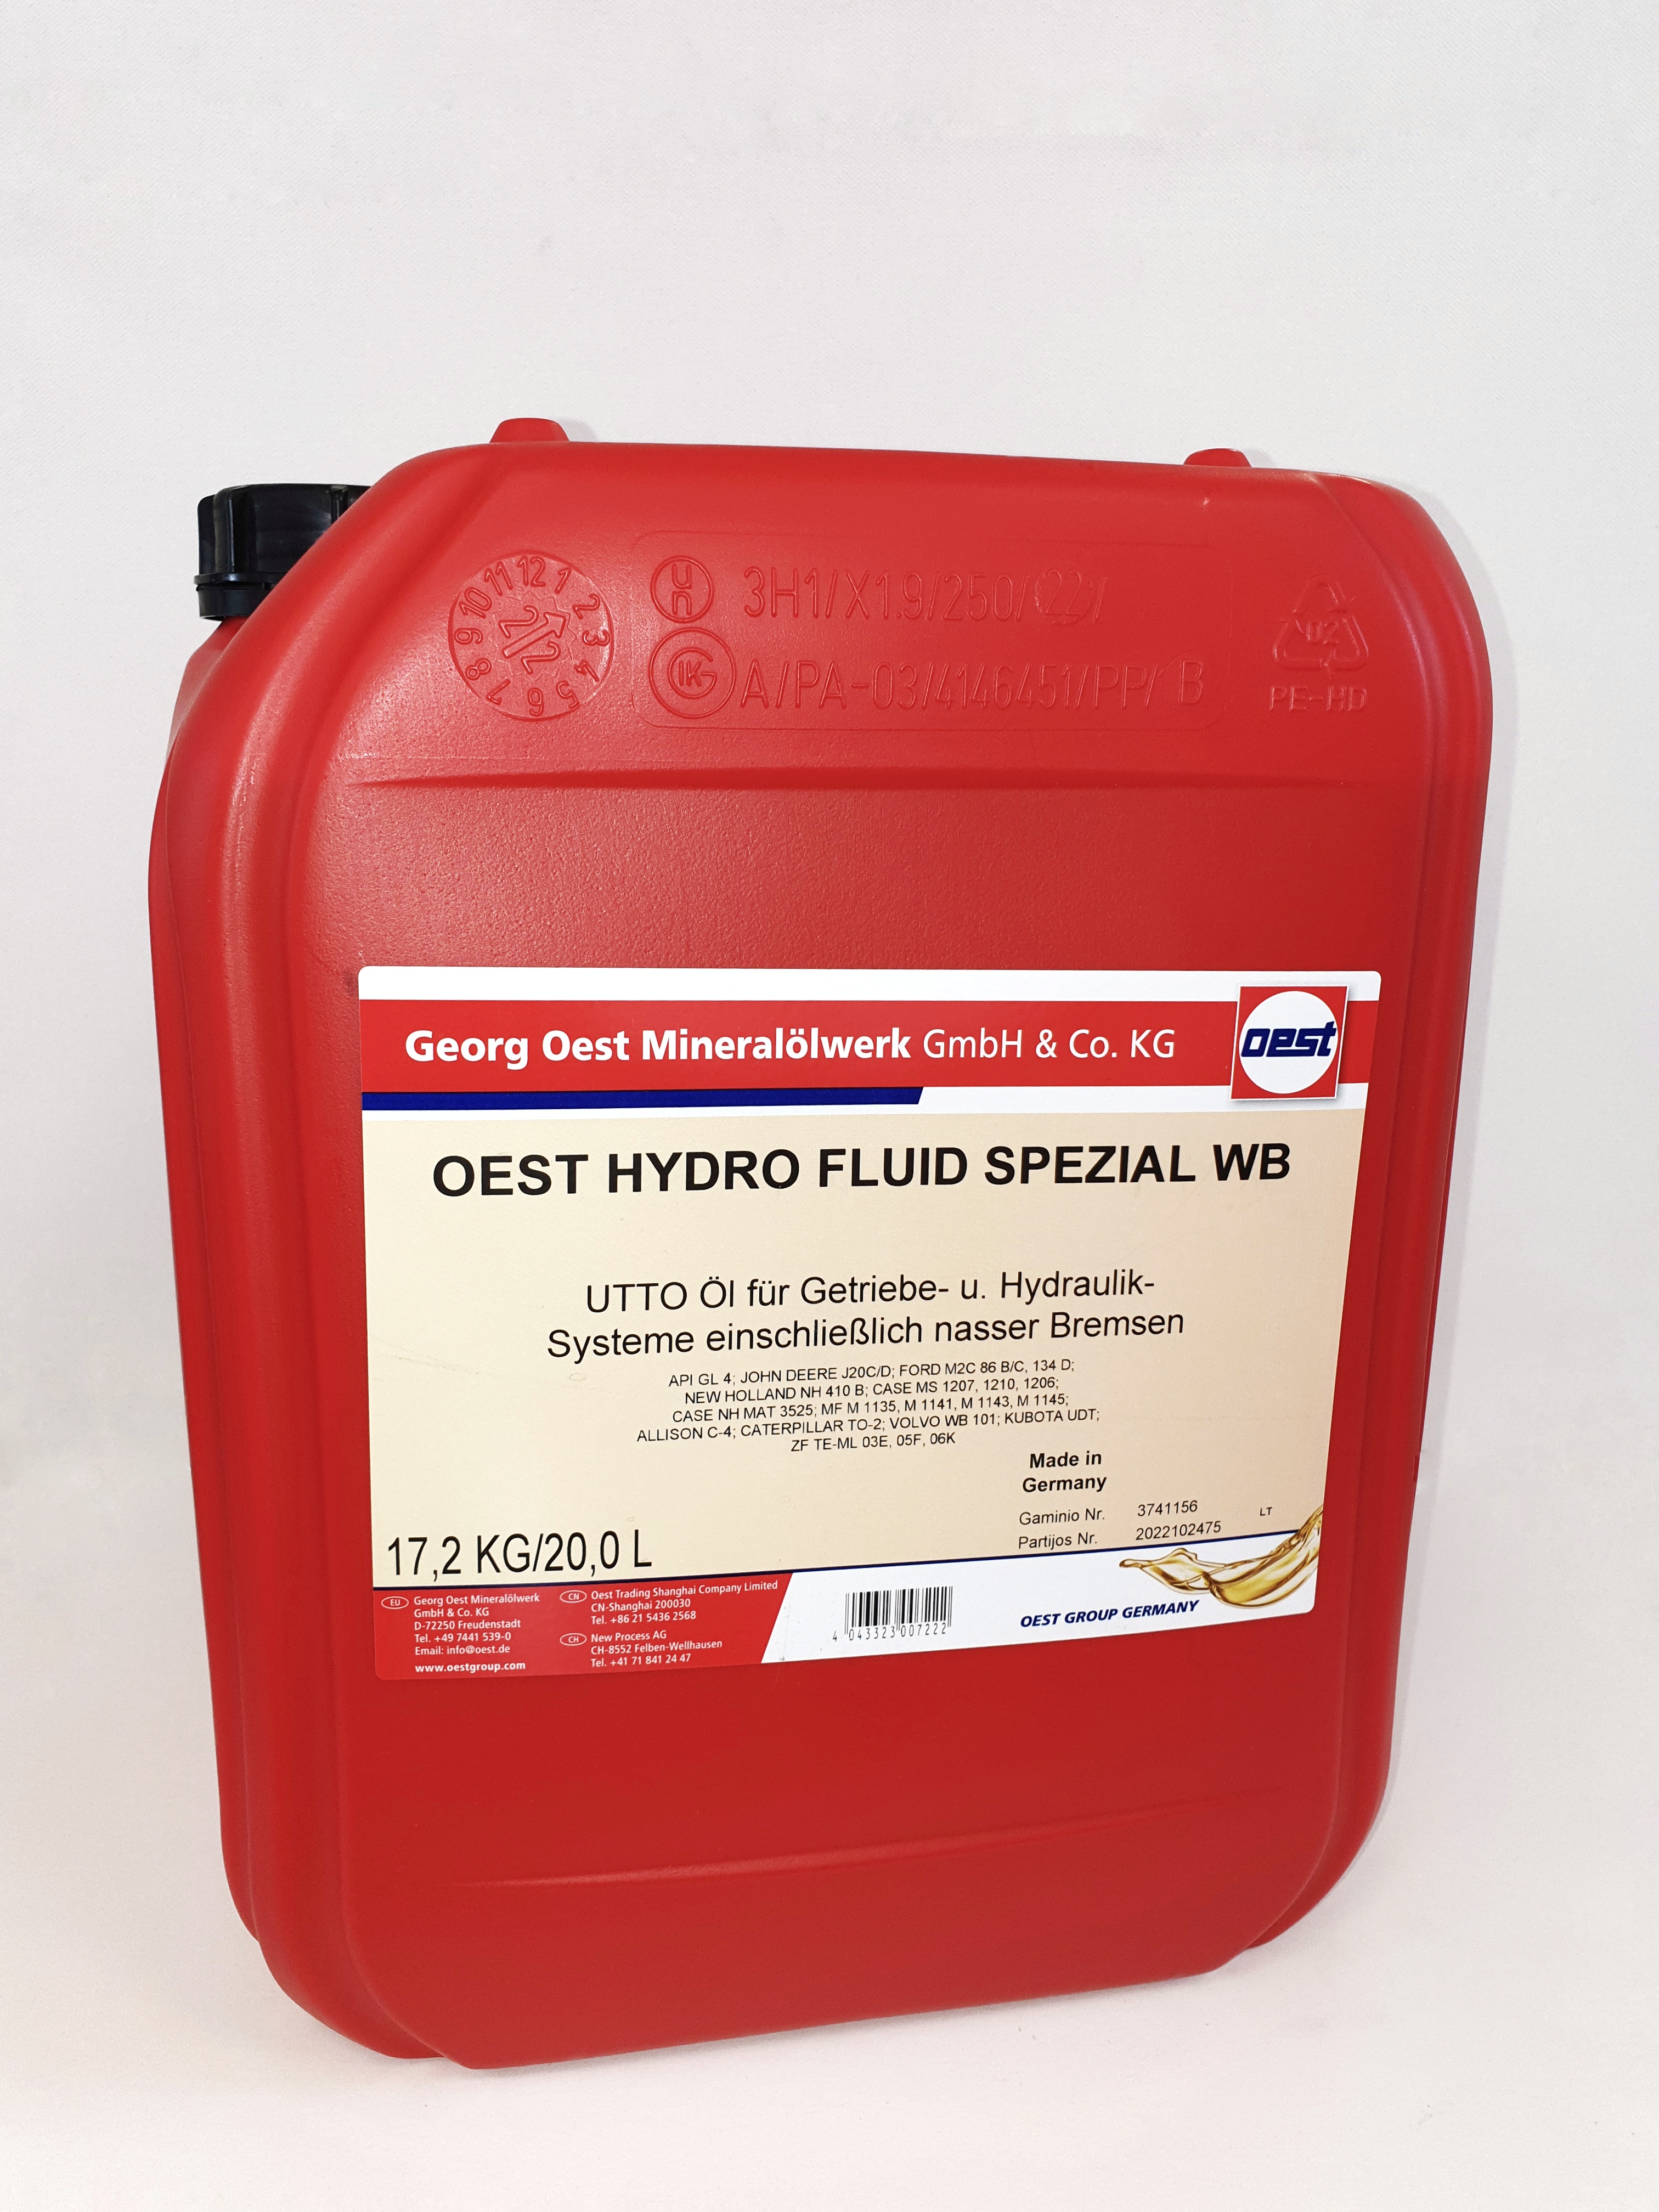 OEST Hydro Fluid Spezial WB